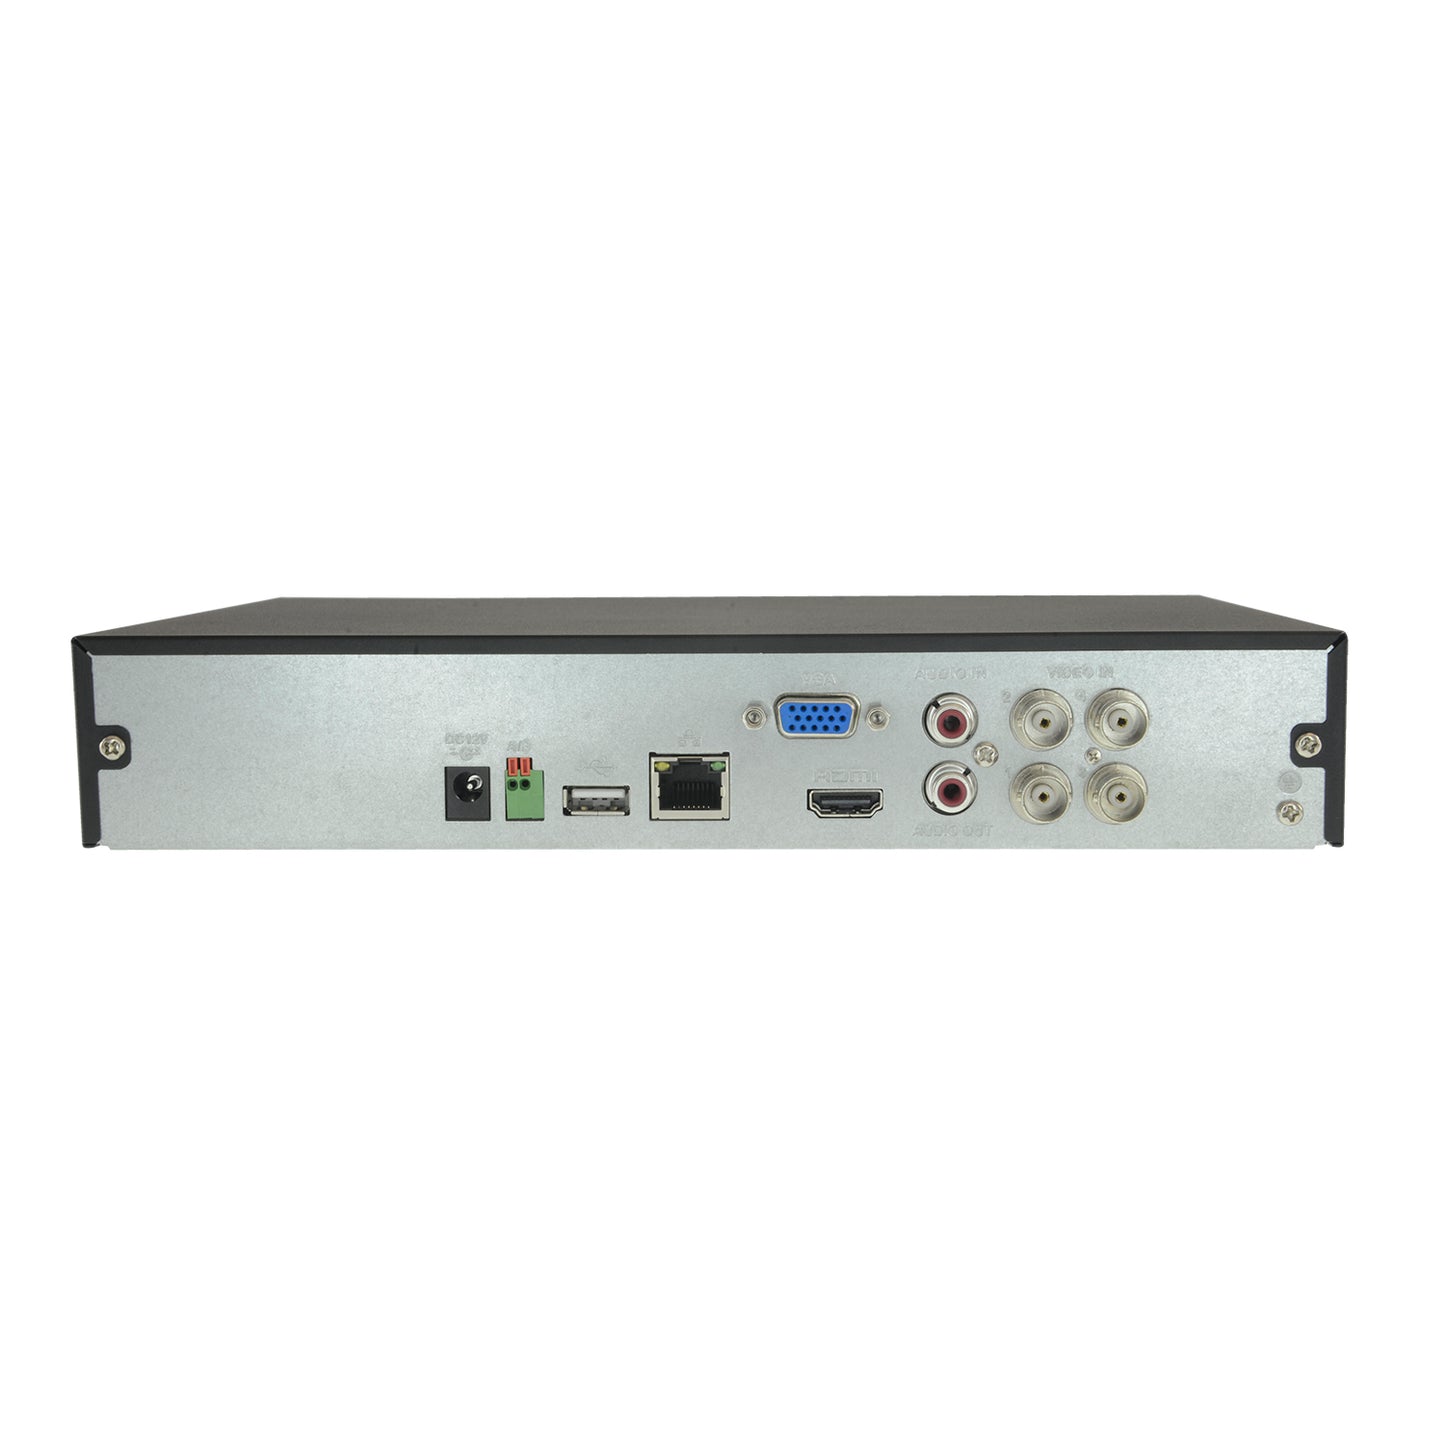 Grabador de vídeo digital HDCVI - 4 CH HDCVI o CVBS / 1 CH audio / 2 IP - 720p (25FPS) - Alarma no disponible - Salida Full HD VGA y HDMI